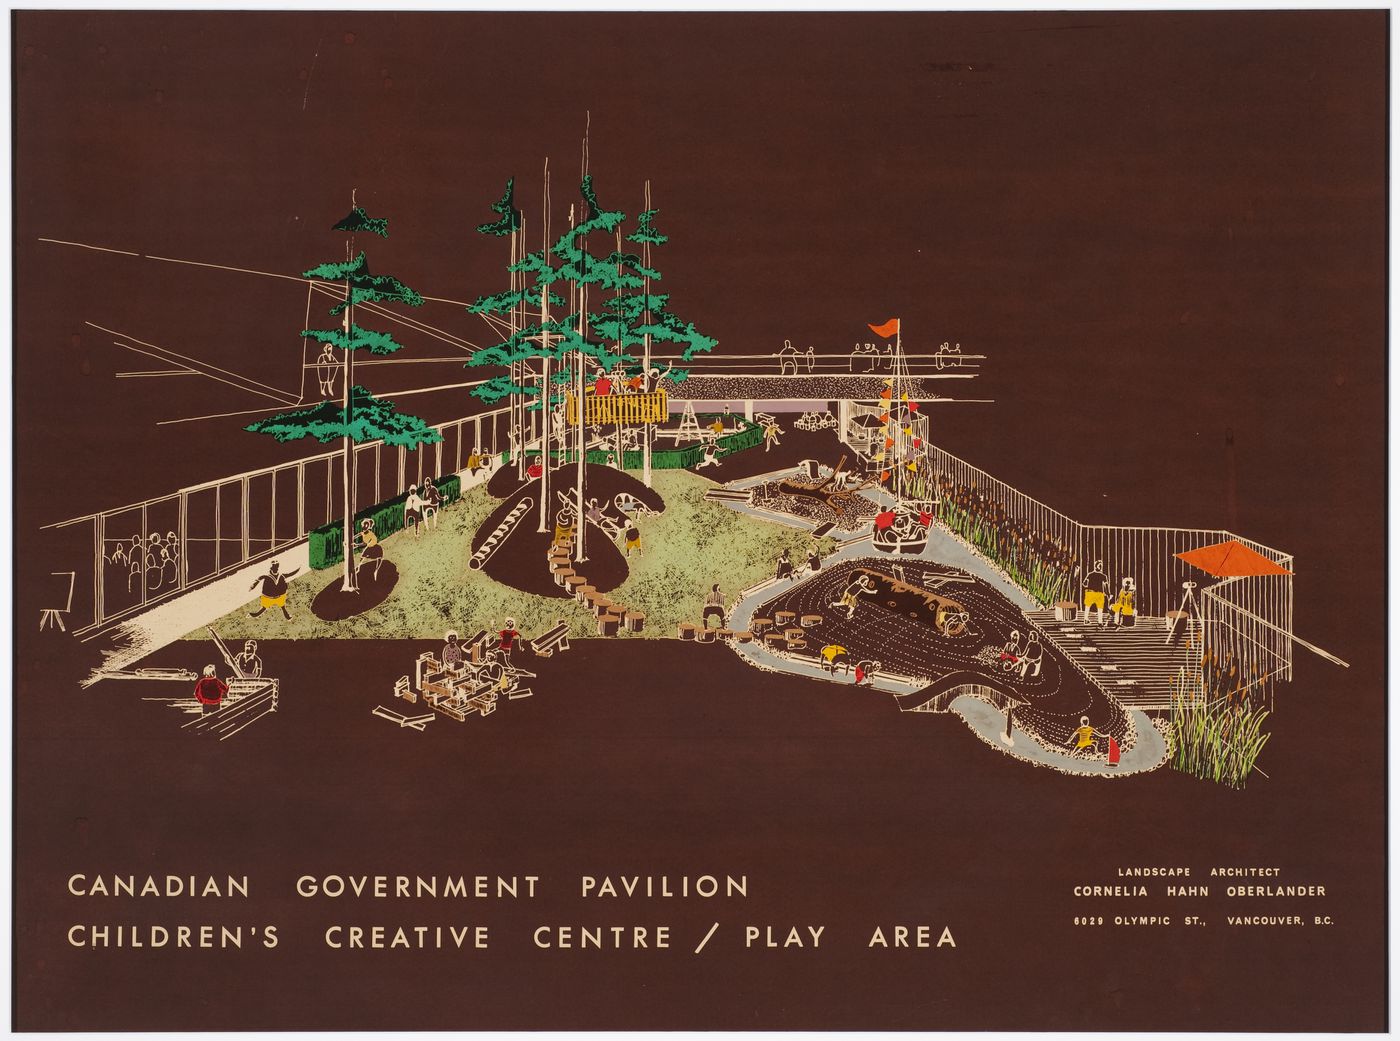 Perspective view for Children's Creative Centre Playground, Canadian Federal Pavilion, Expo '67, Montréal, Québec